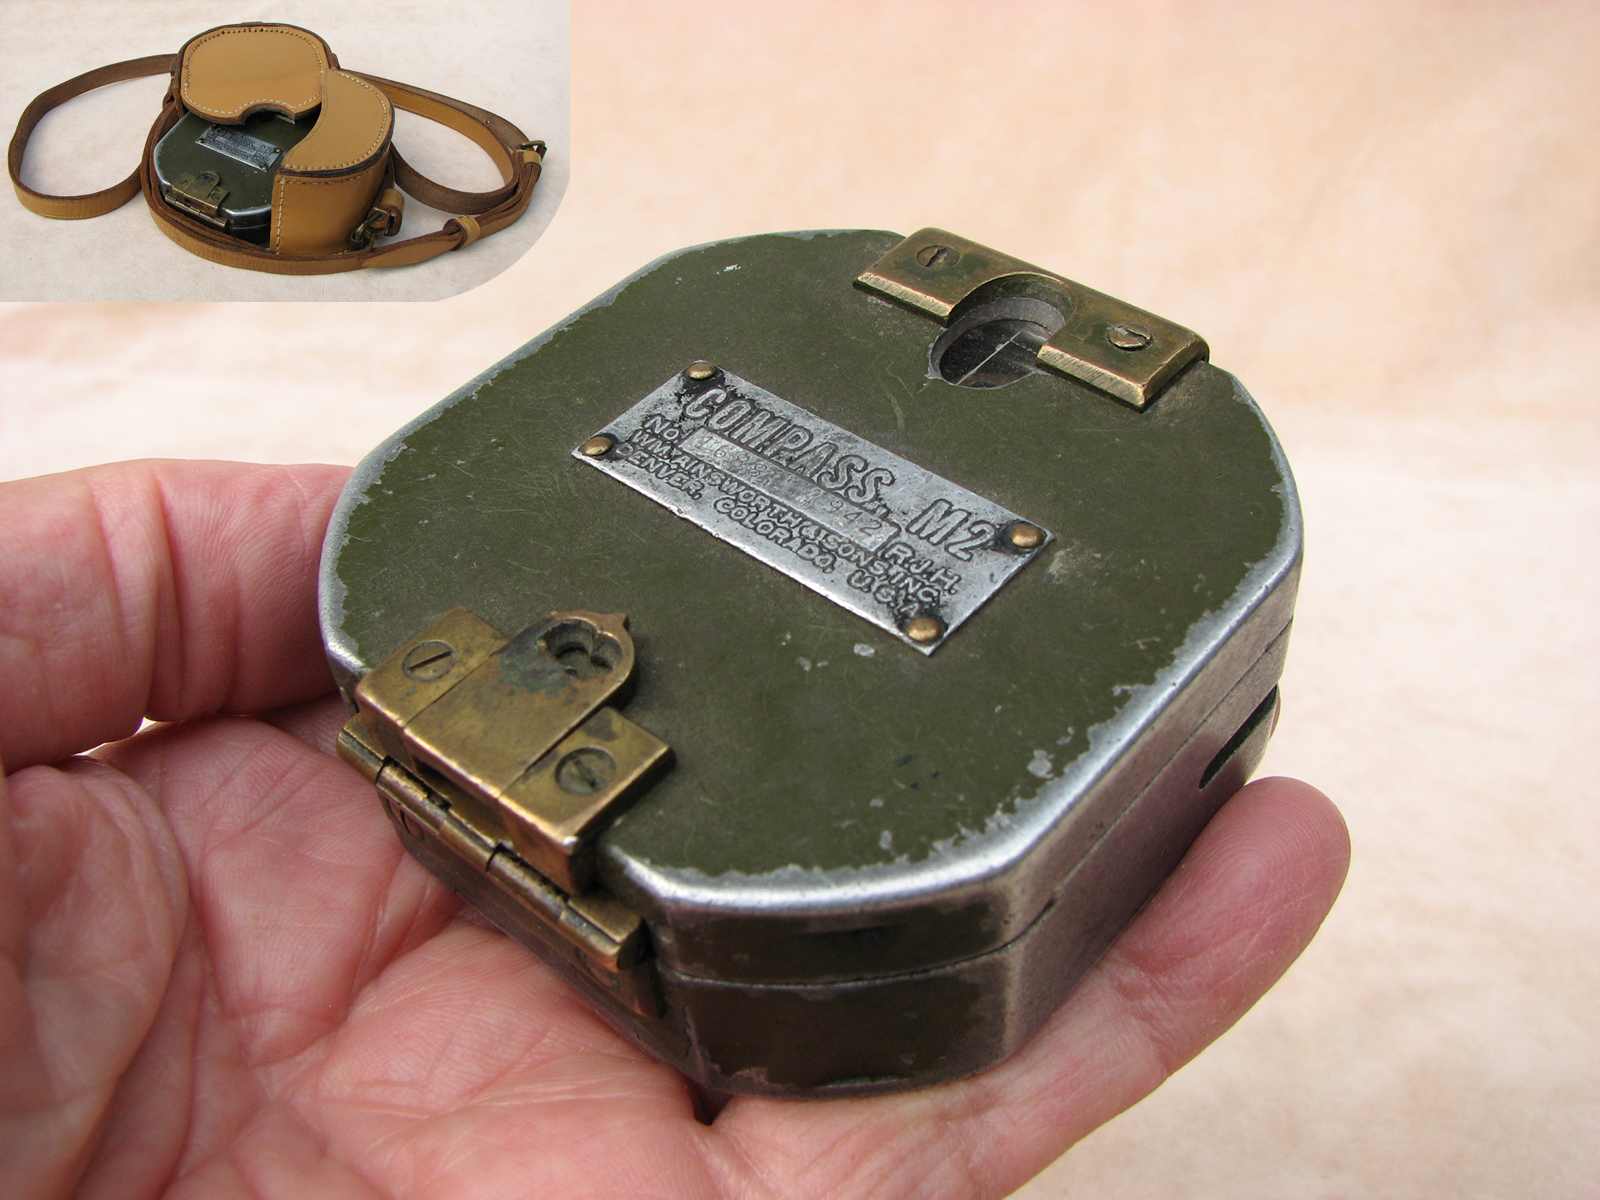 Rare Brunton M2 compass by William Ainsworth dated 1942